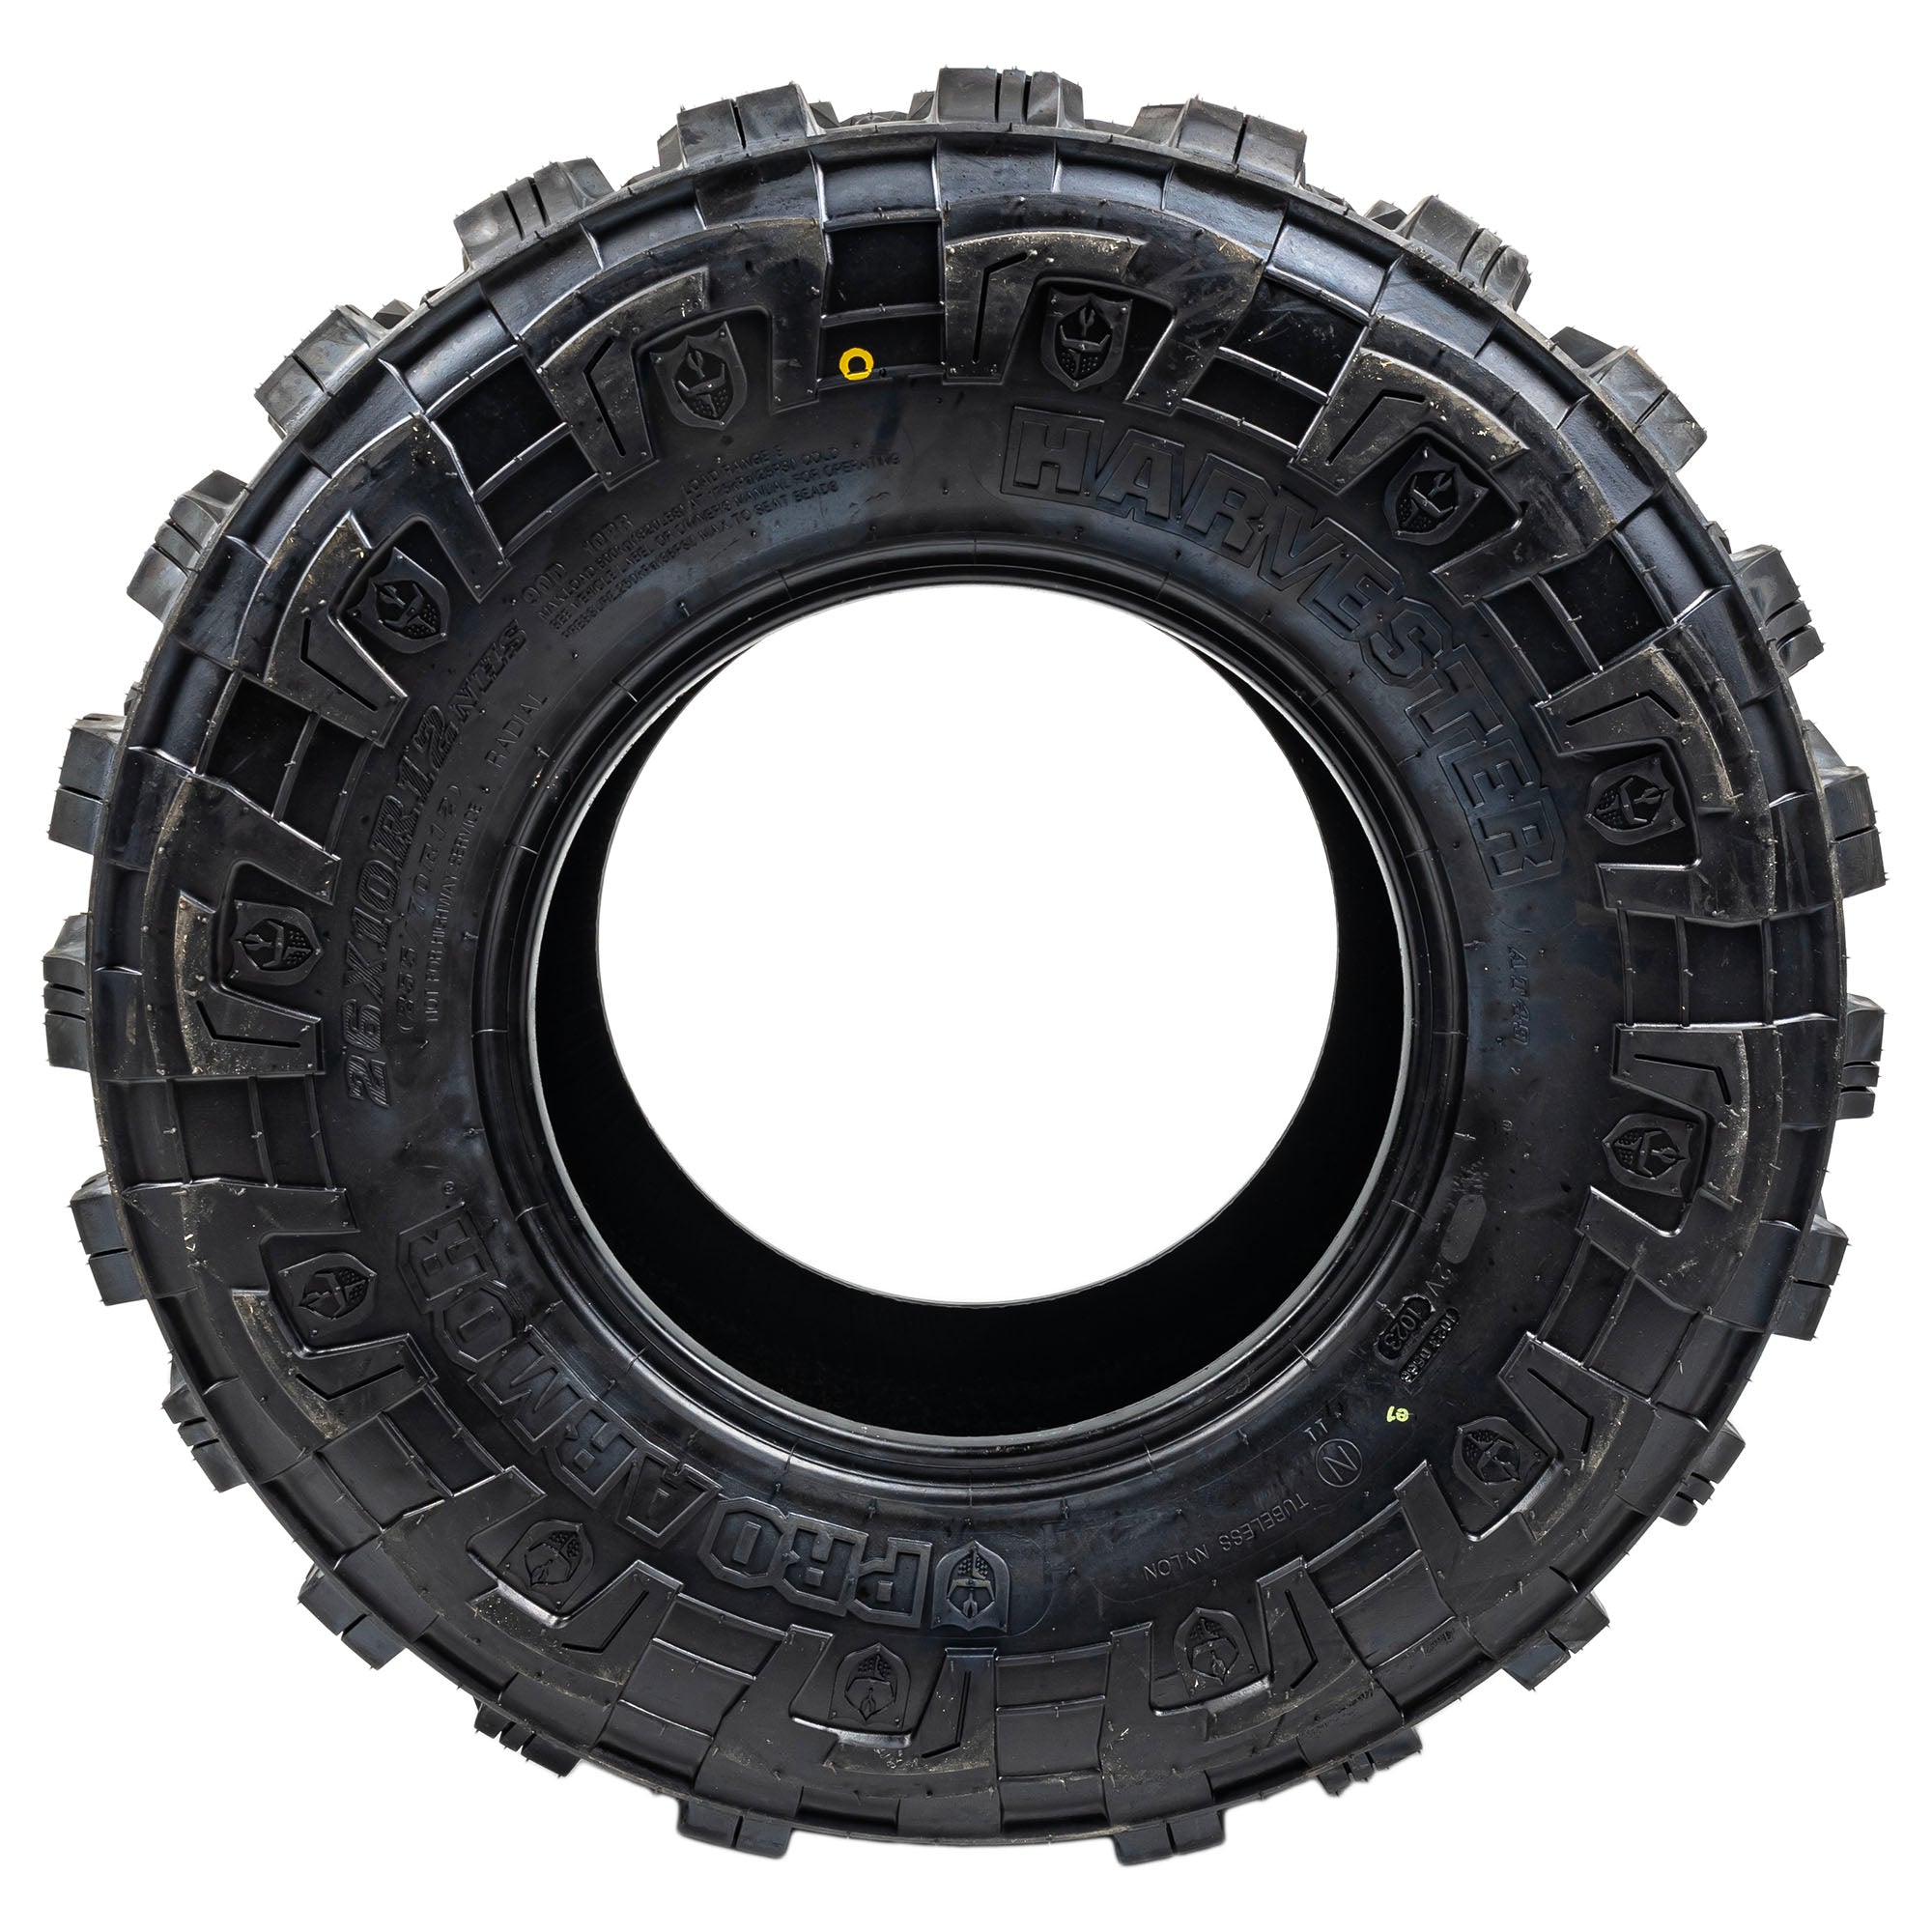 Pro Armor 5415966 Harvester Tire, Rear 26x10R12